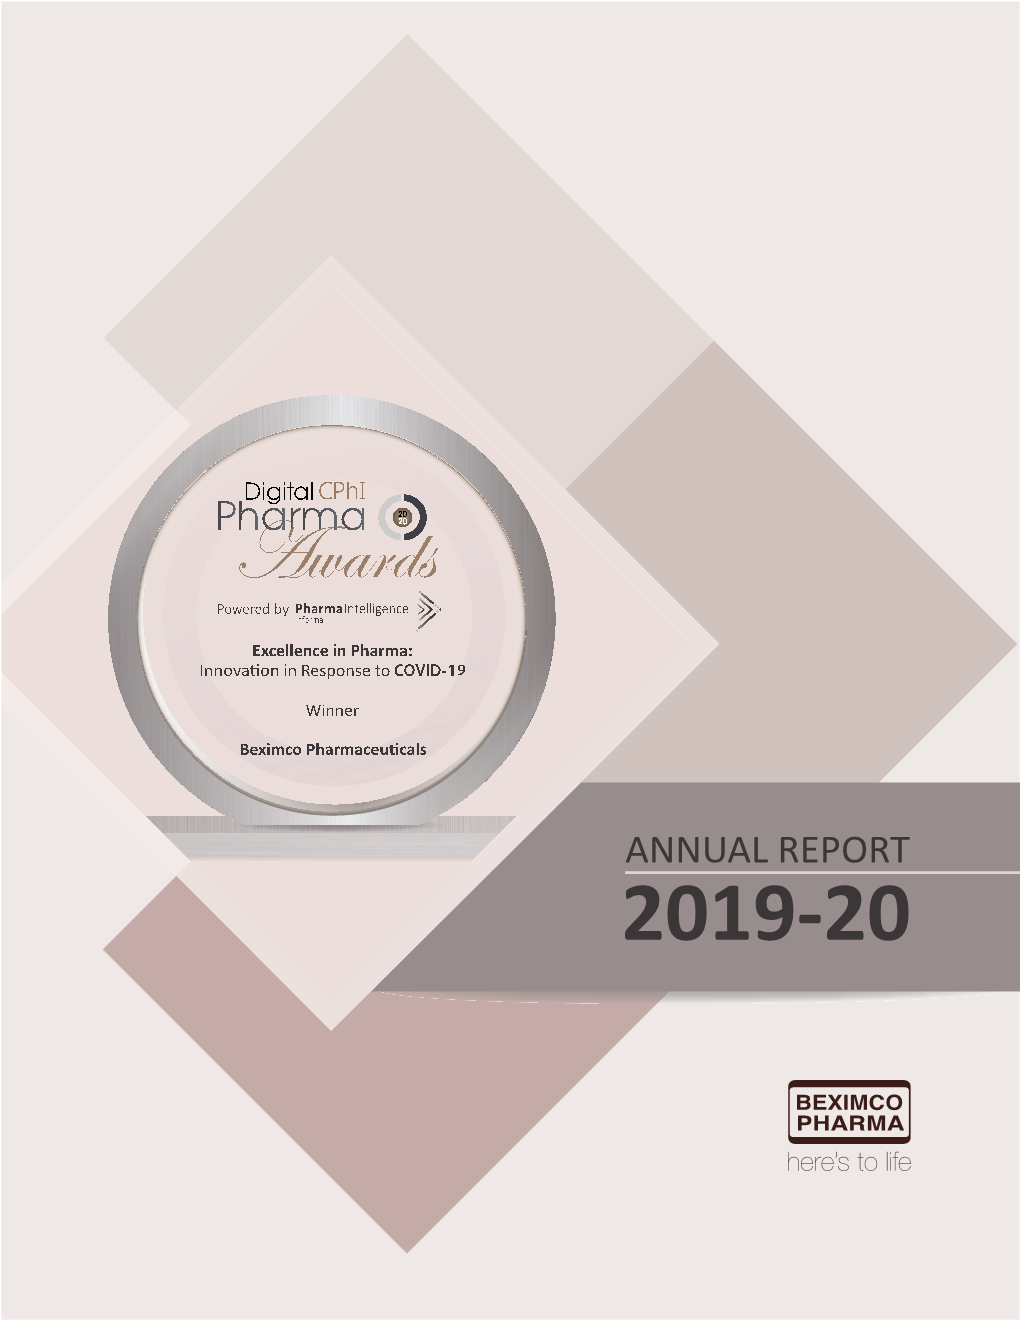 ANNUAL REPORT 2019-20 Awards Powered by Pharmaintelligence Informa